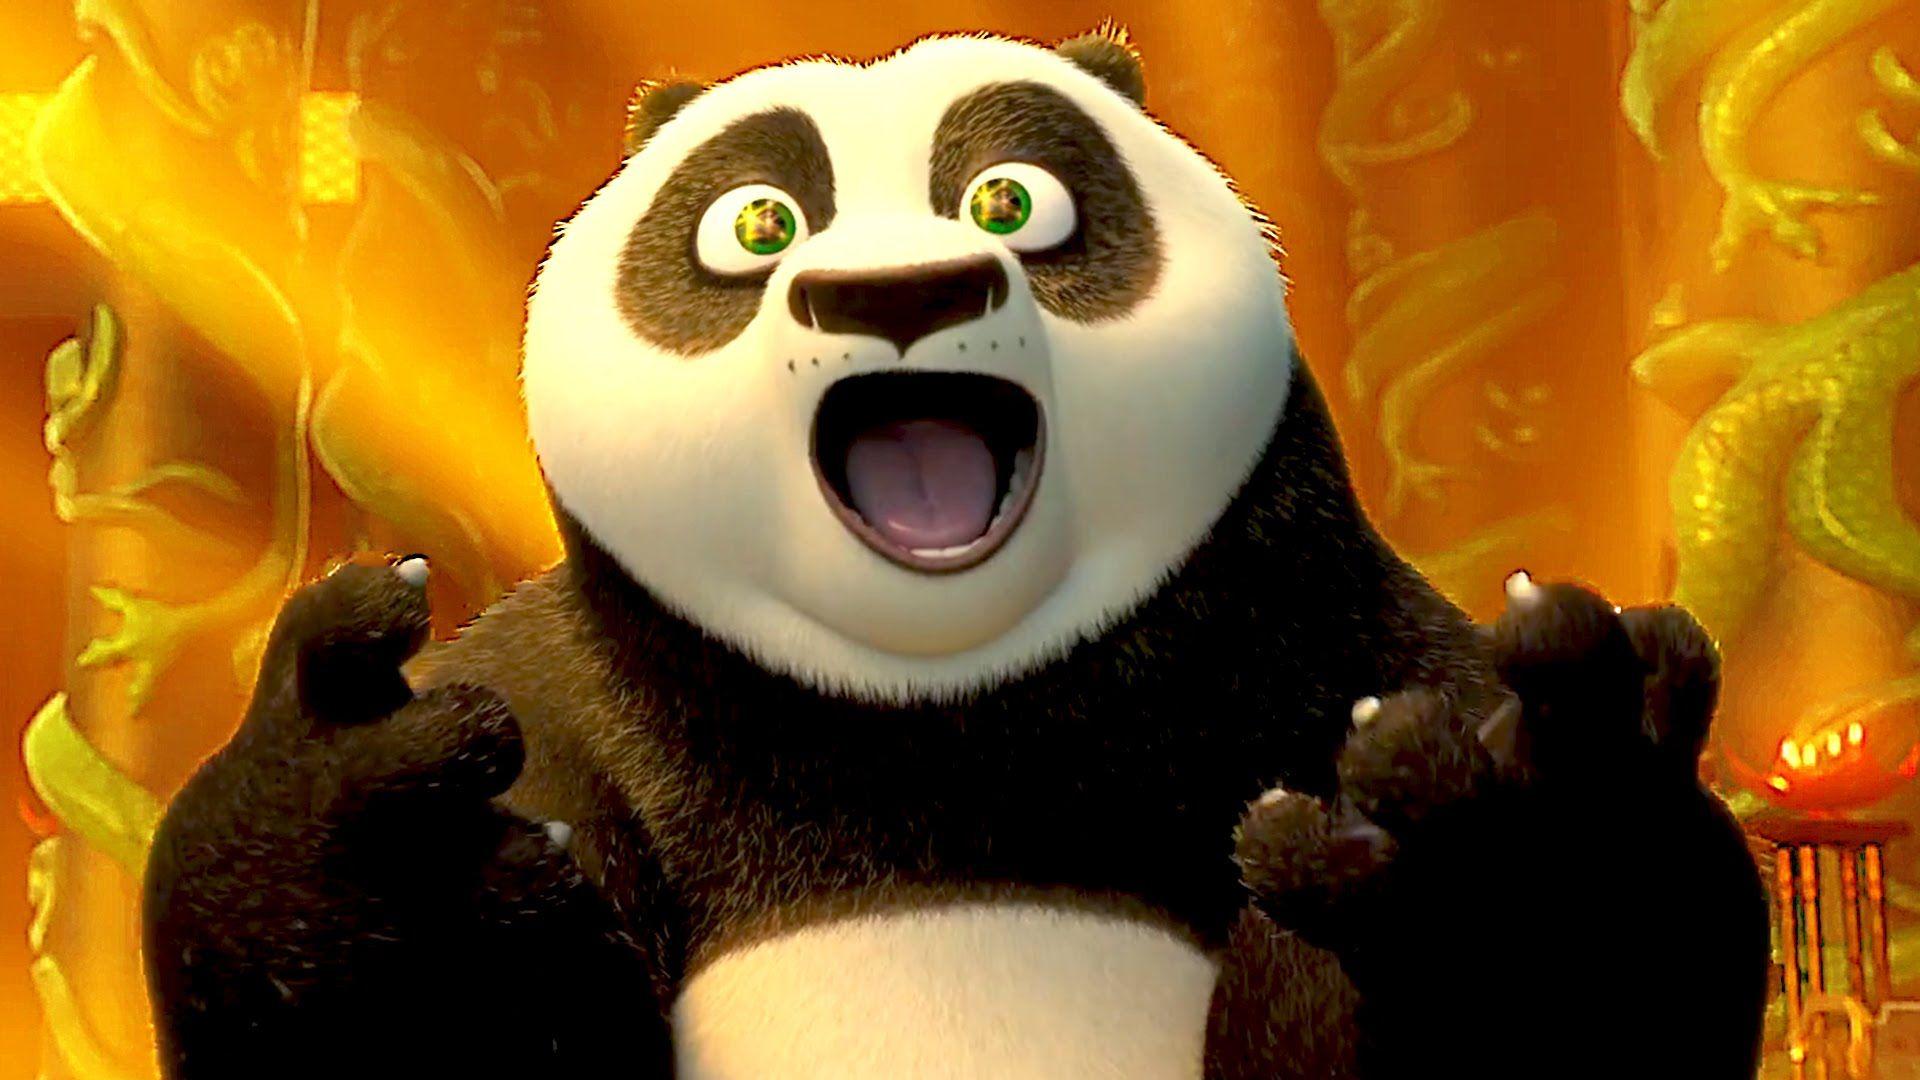 Kung Fu Panda Wallpaper HD